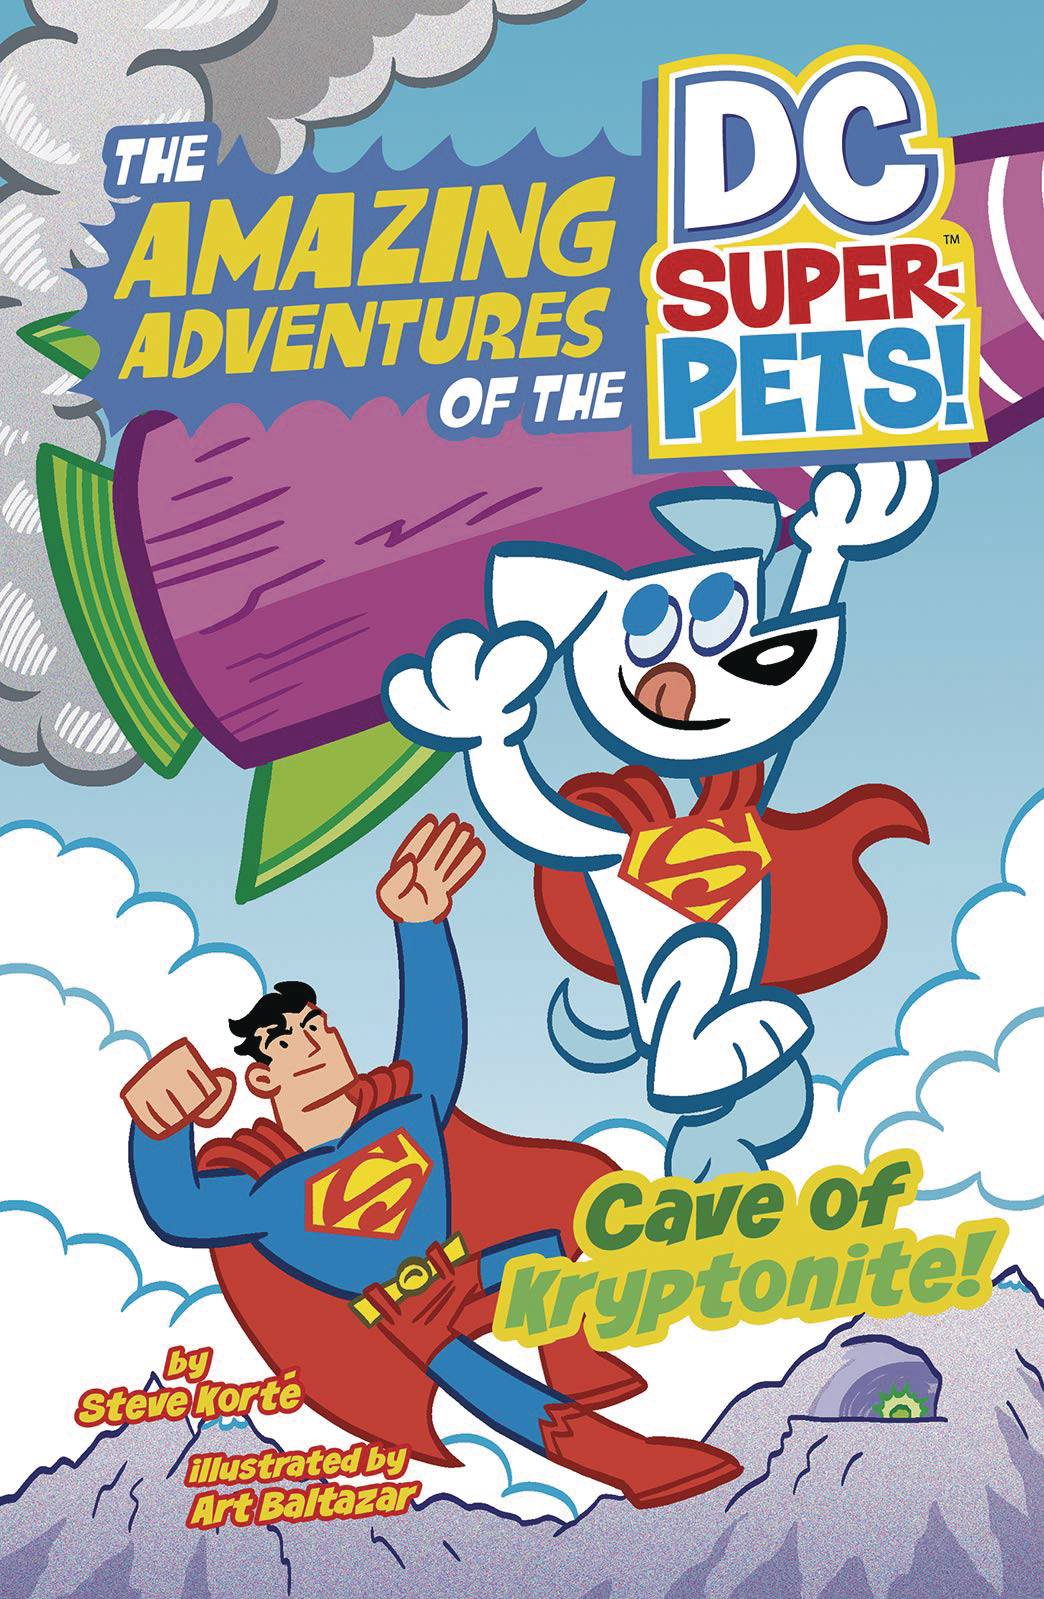 DC Super Pets: Cave of Kryptonite